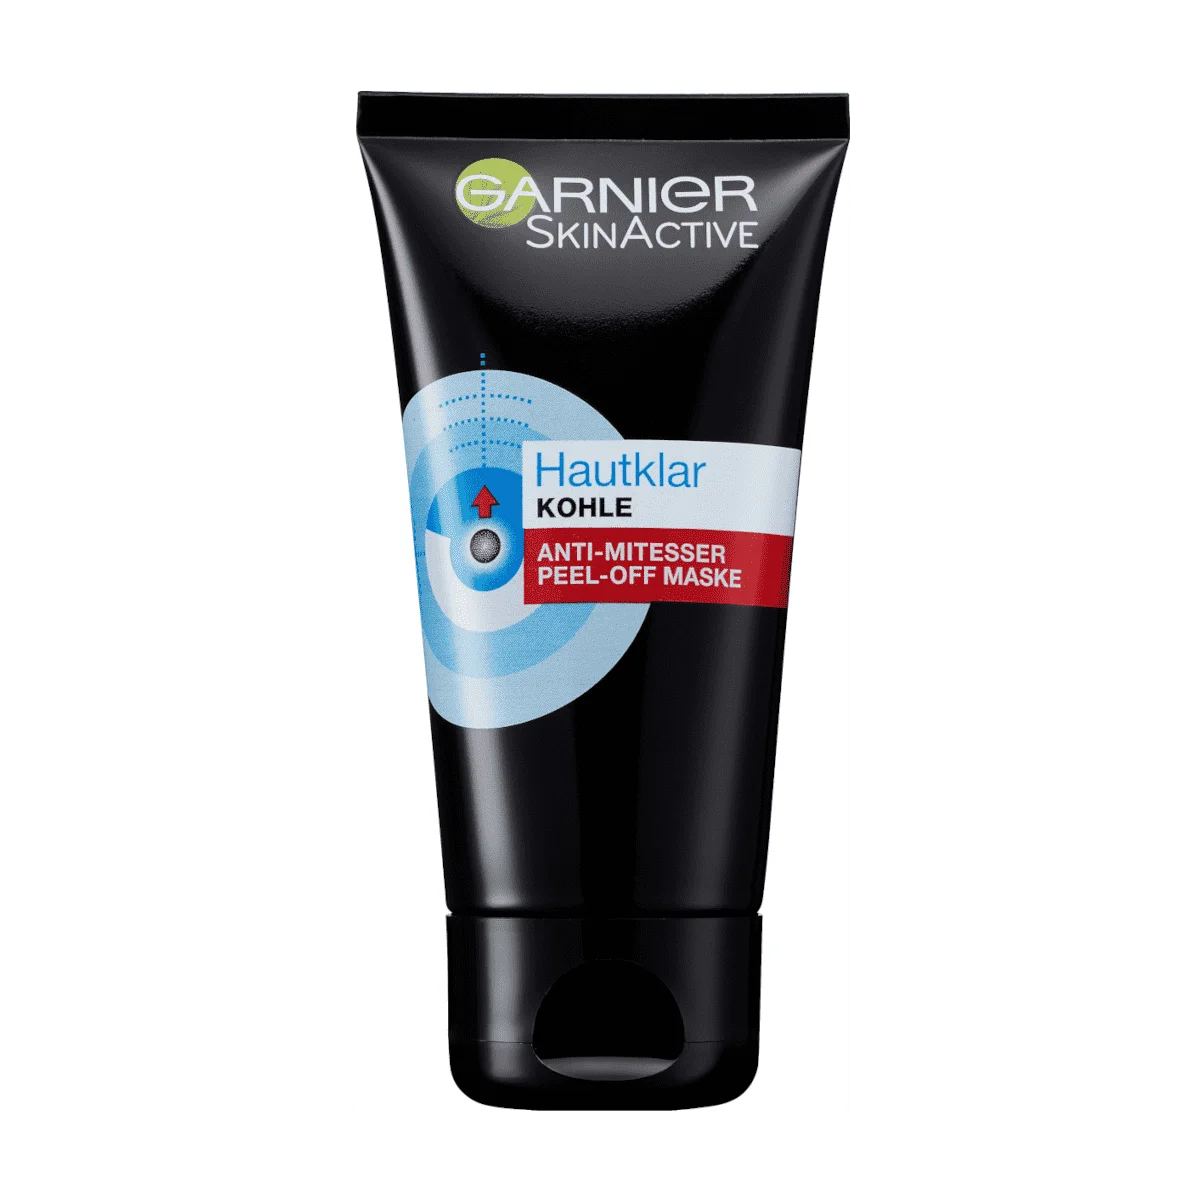 Garnier SkinActive Hautklar Anti-Mitesser Peel-Off Maske, 50 ml